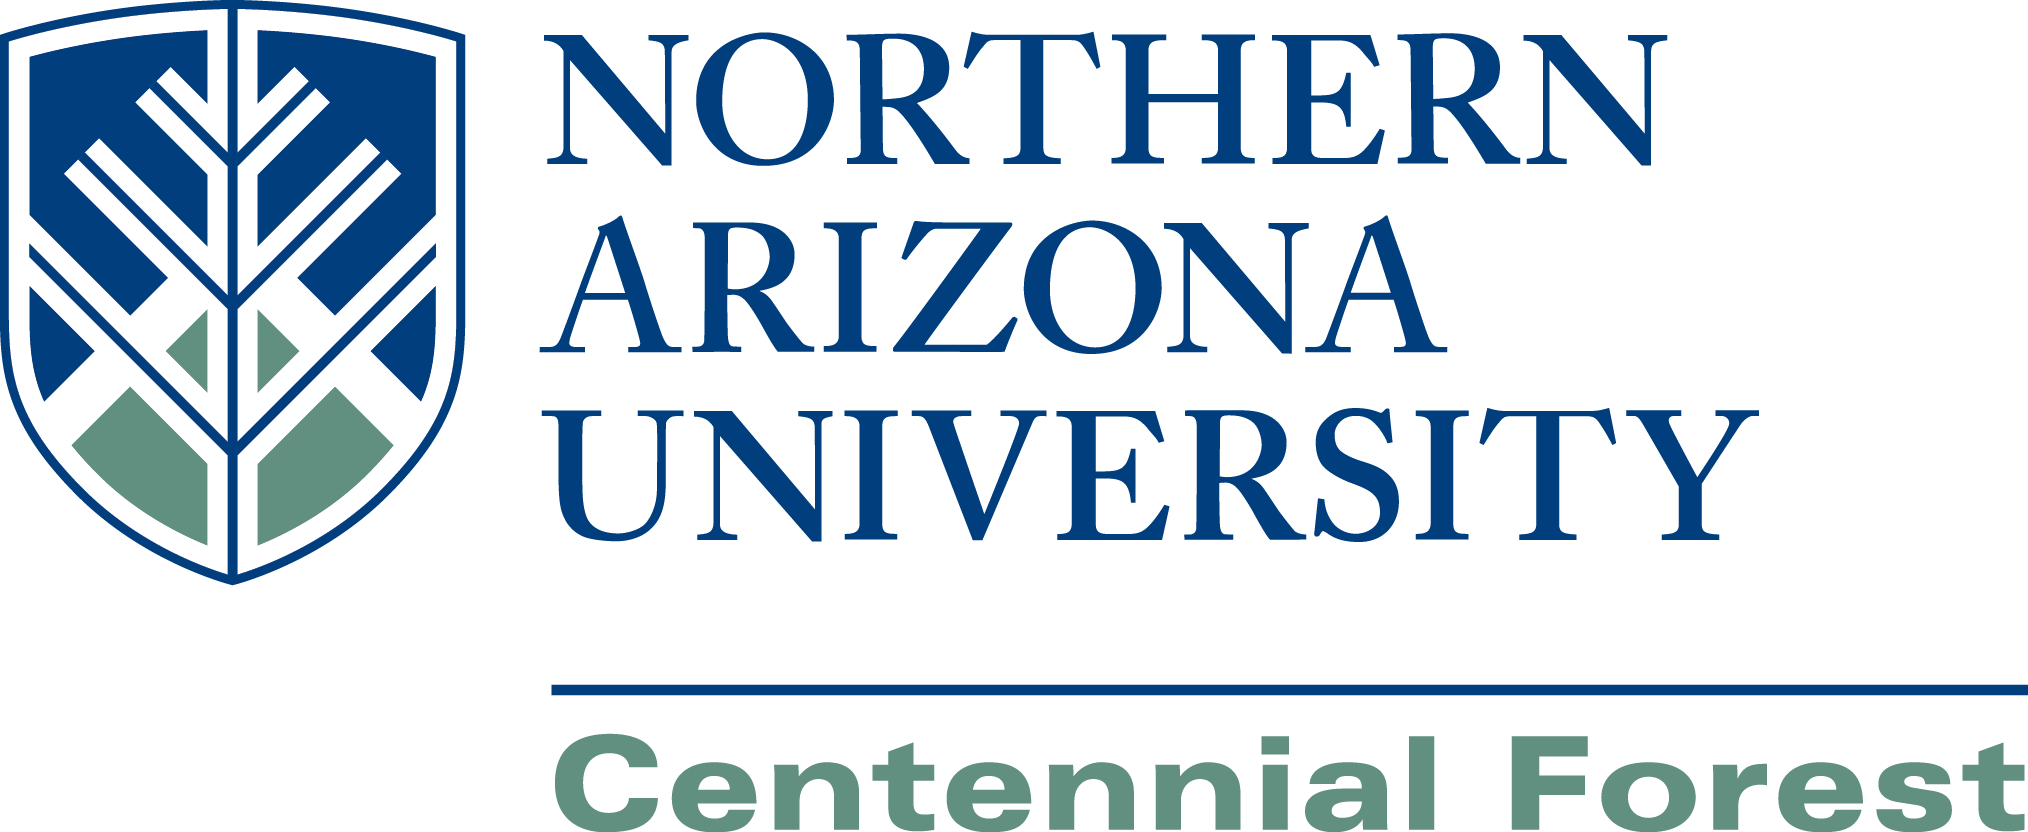 Northern Arizona Logo - Print Logos - School of Forestry - Northern Arizona University